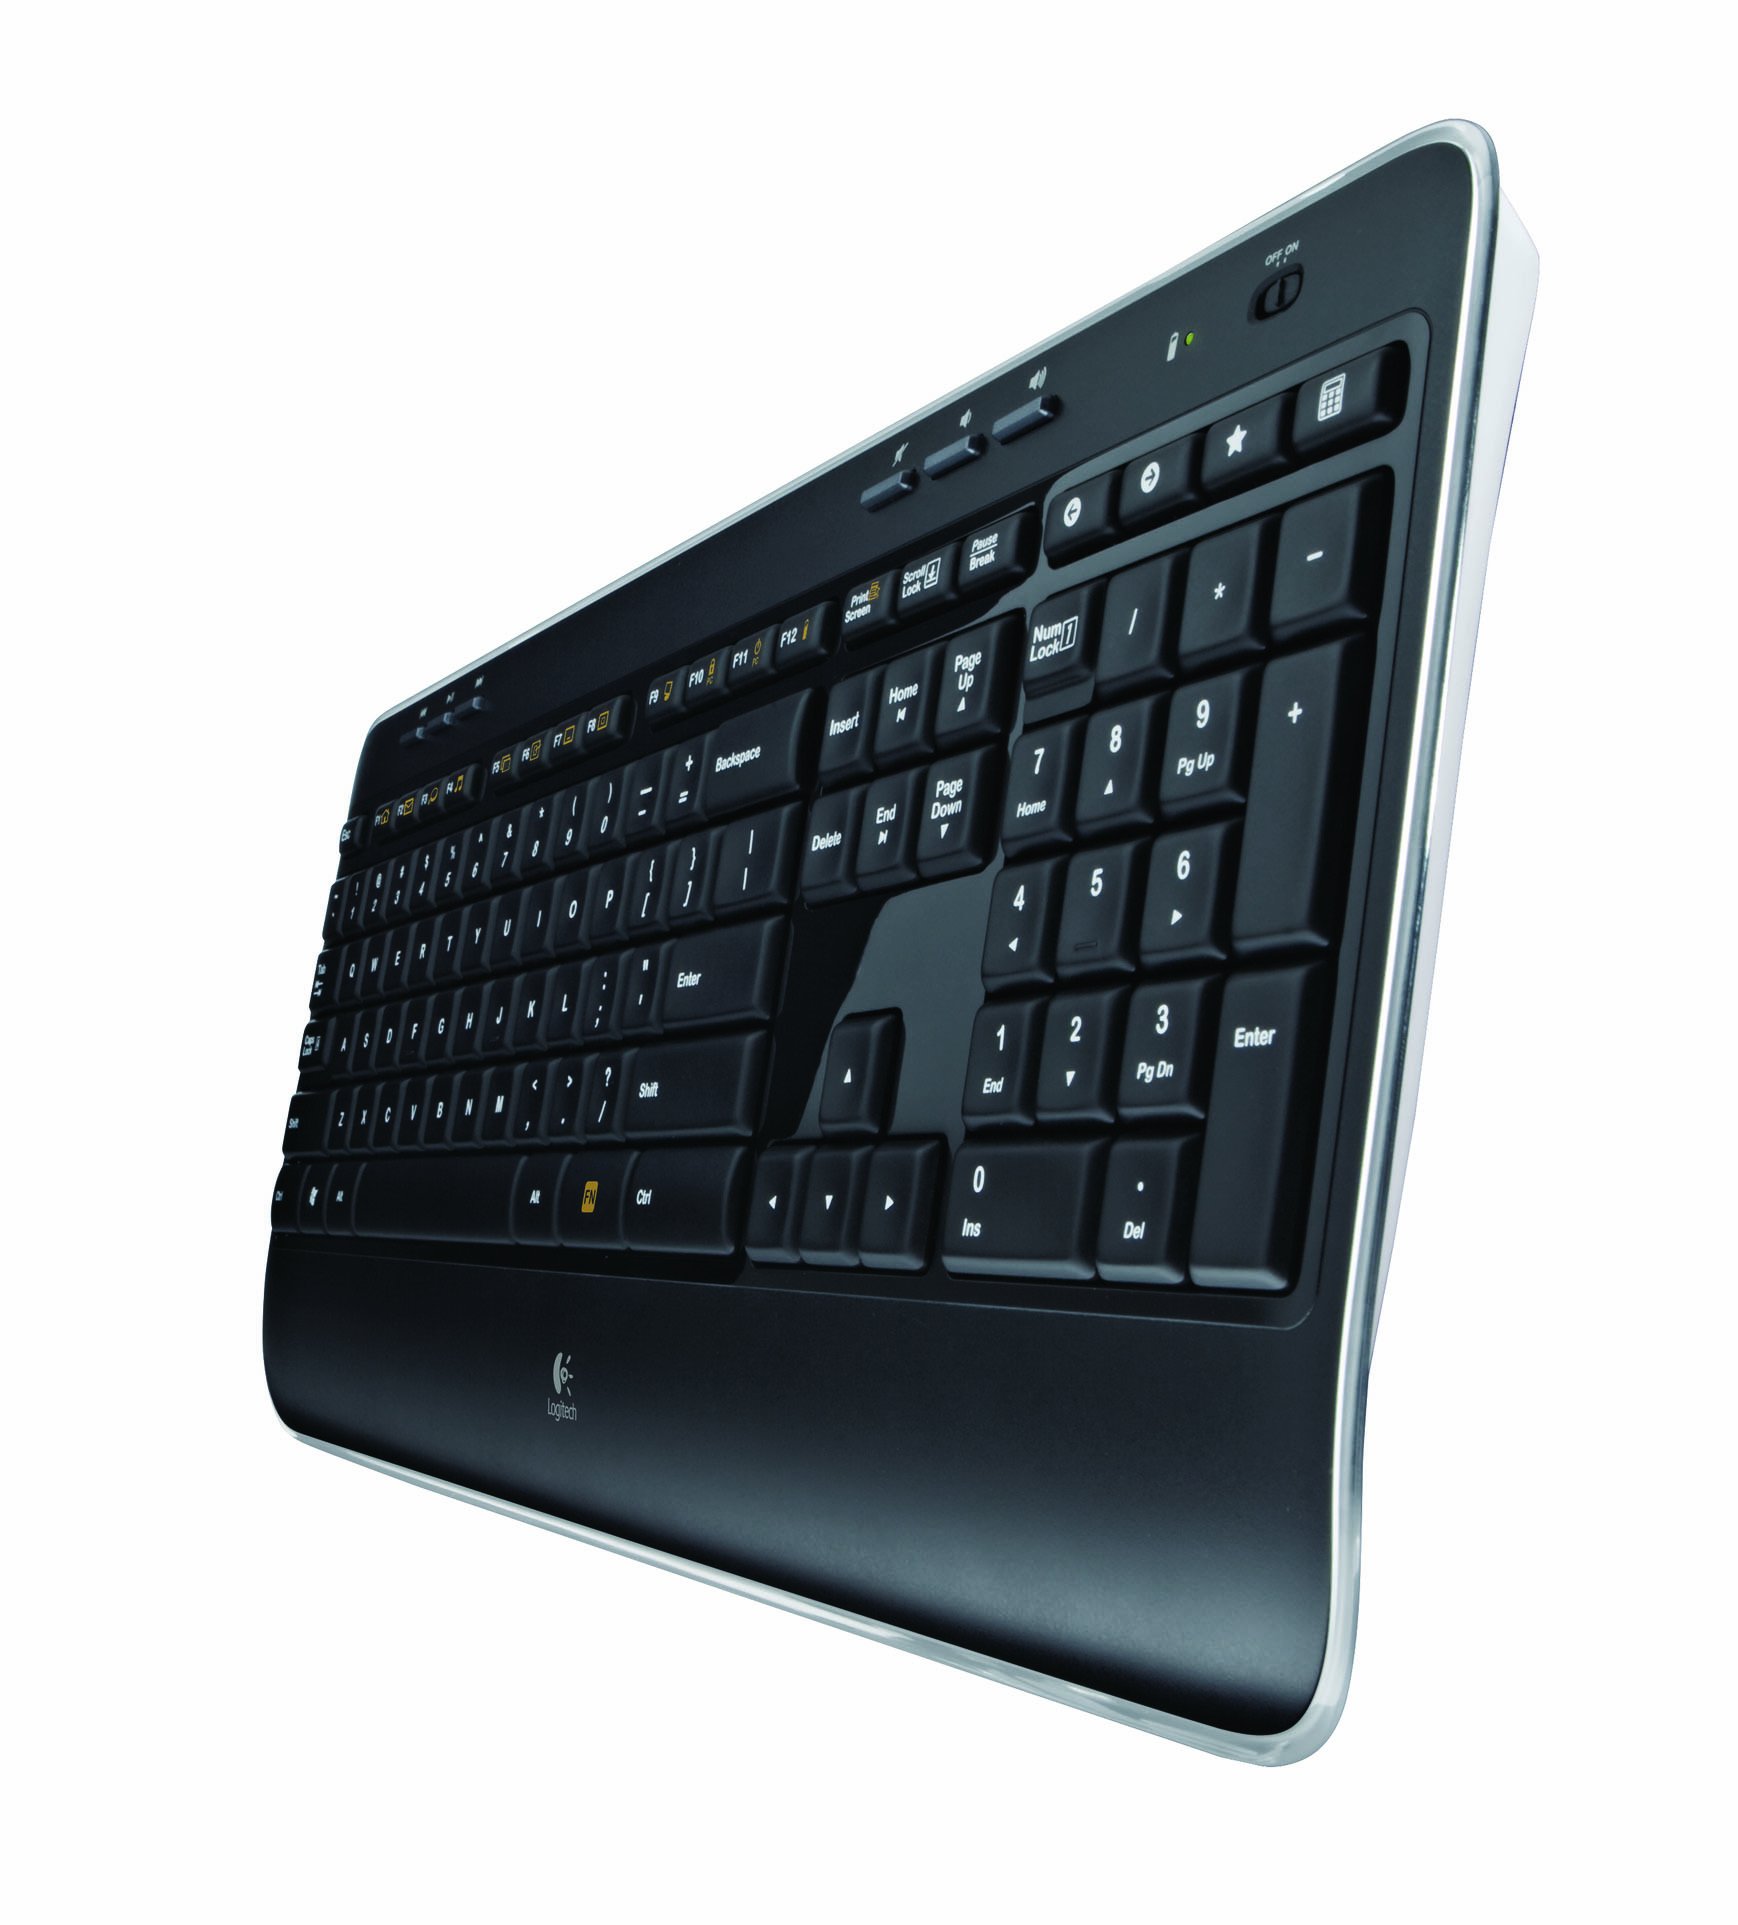 Logitech 920002553 Mk520 Wireless Desktop Set, Keyboard/Mouse, USB, Black (Log920002553)